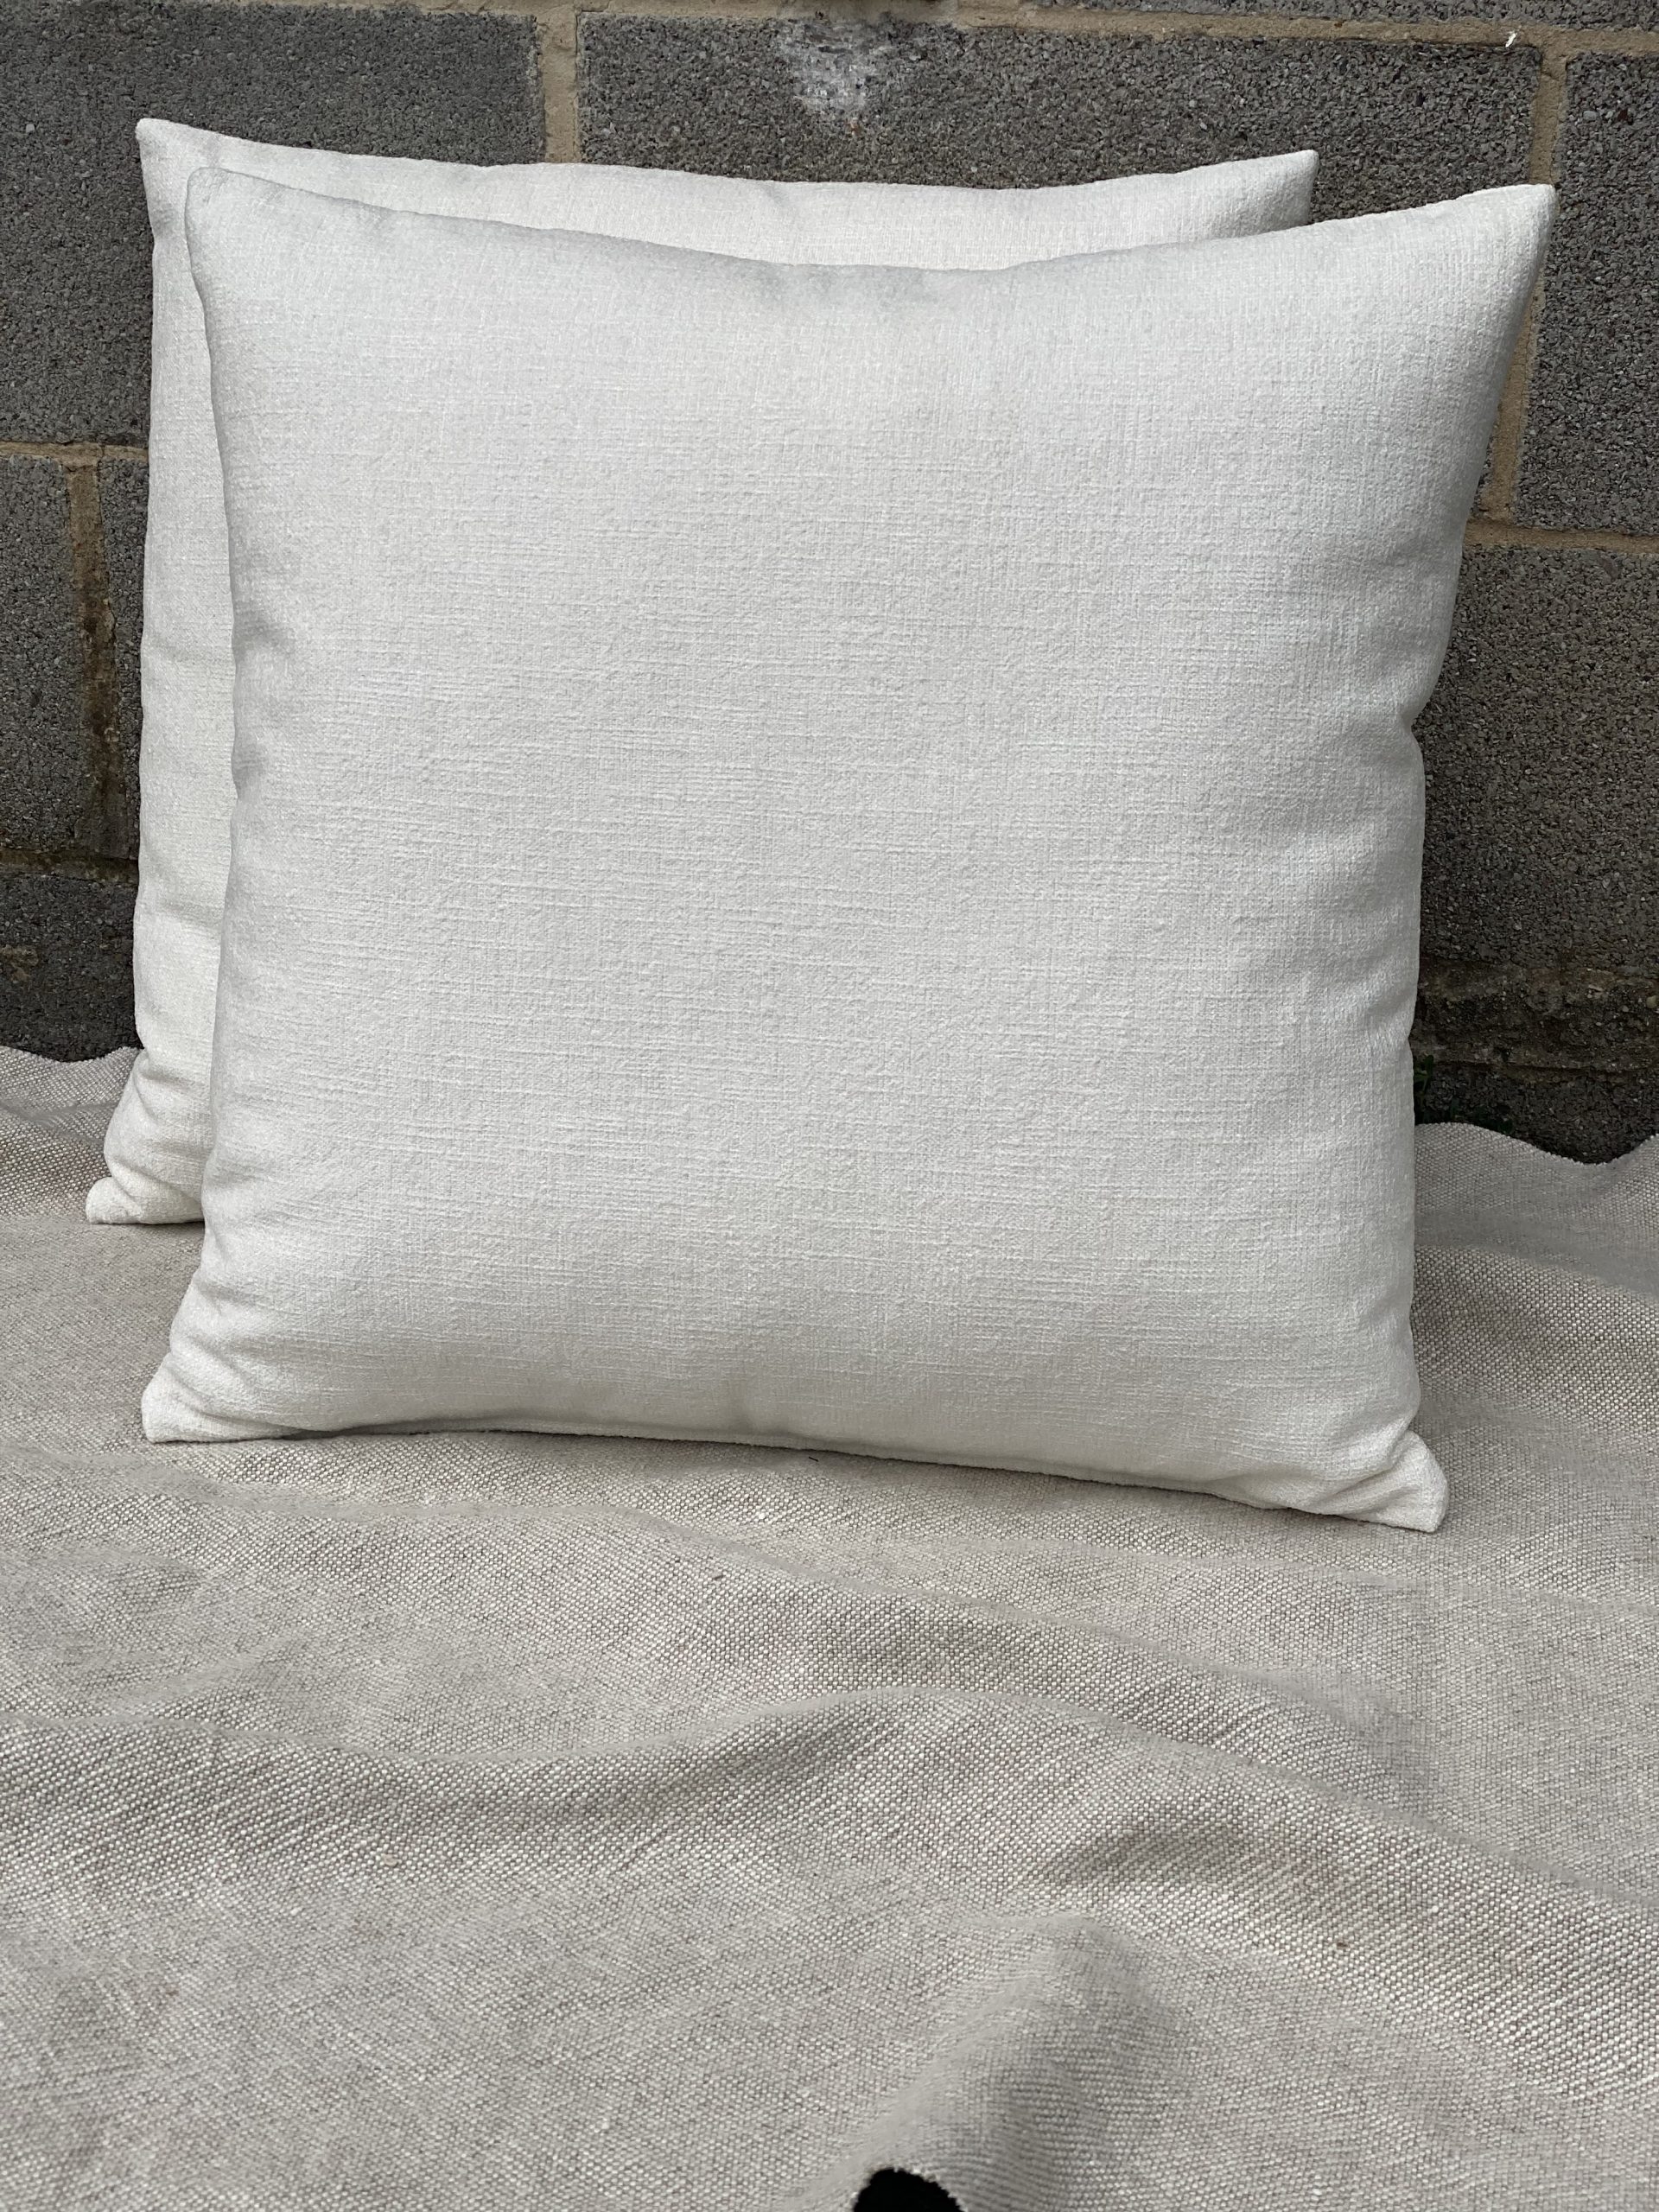 TOBE Design Group Pillows